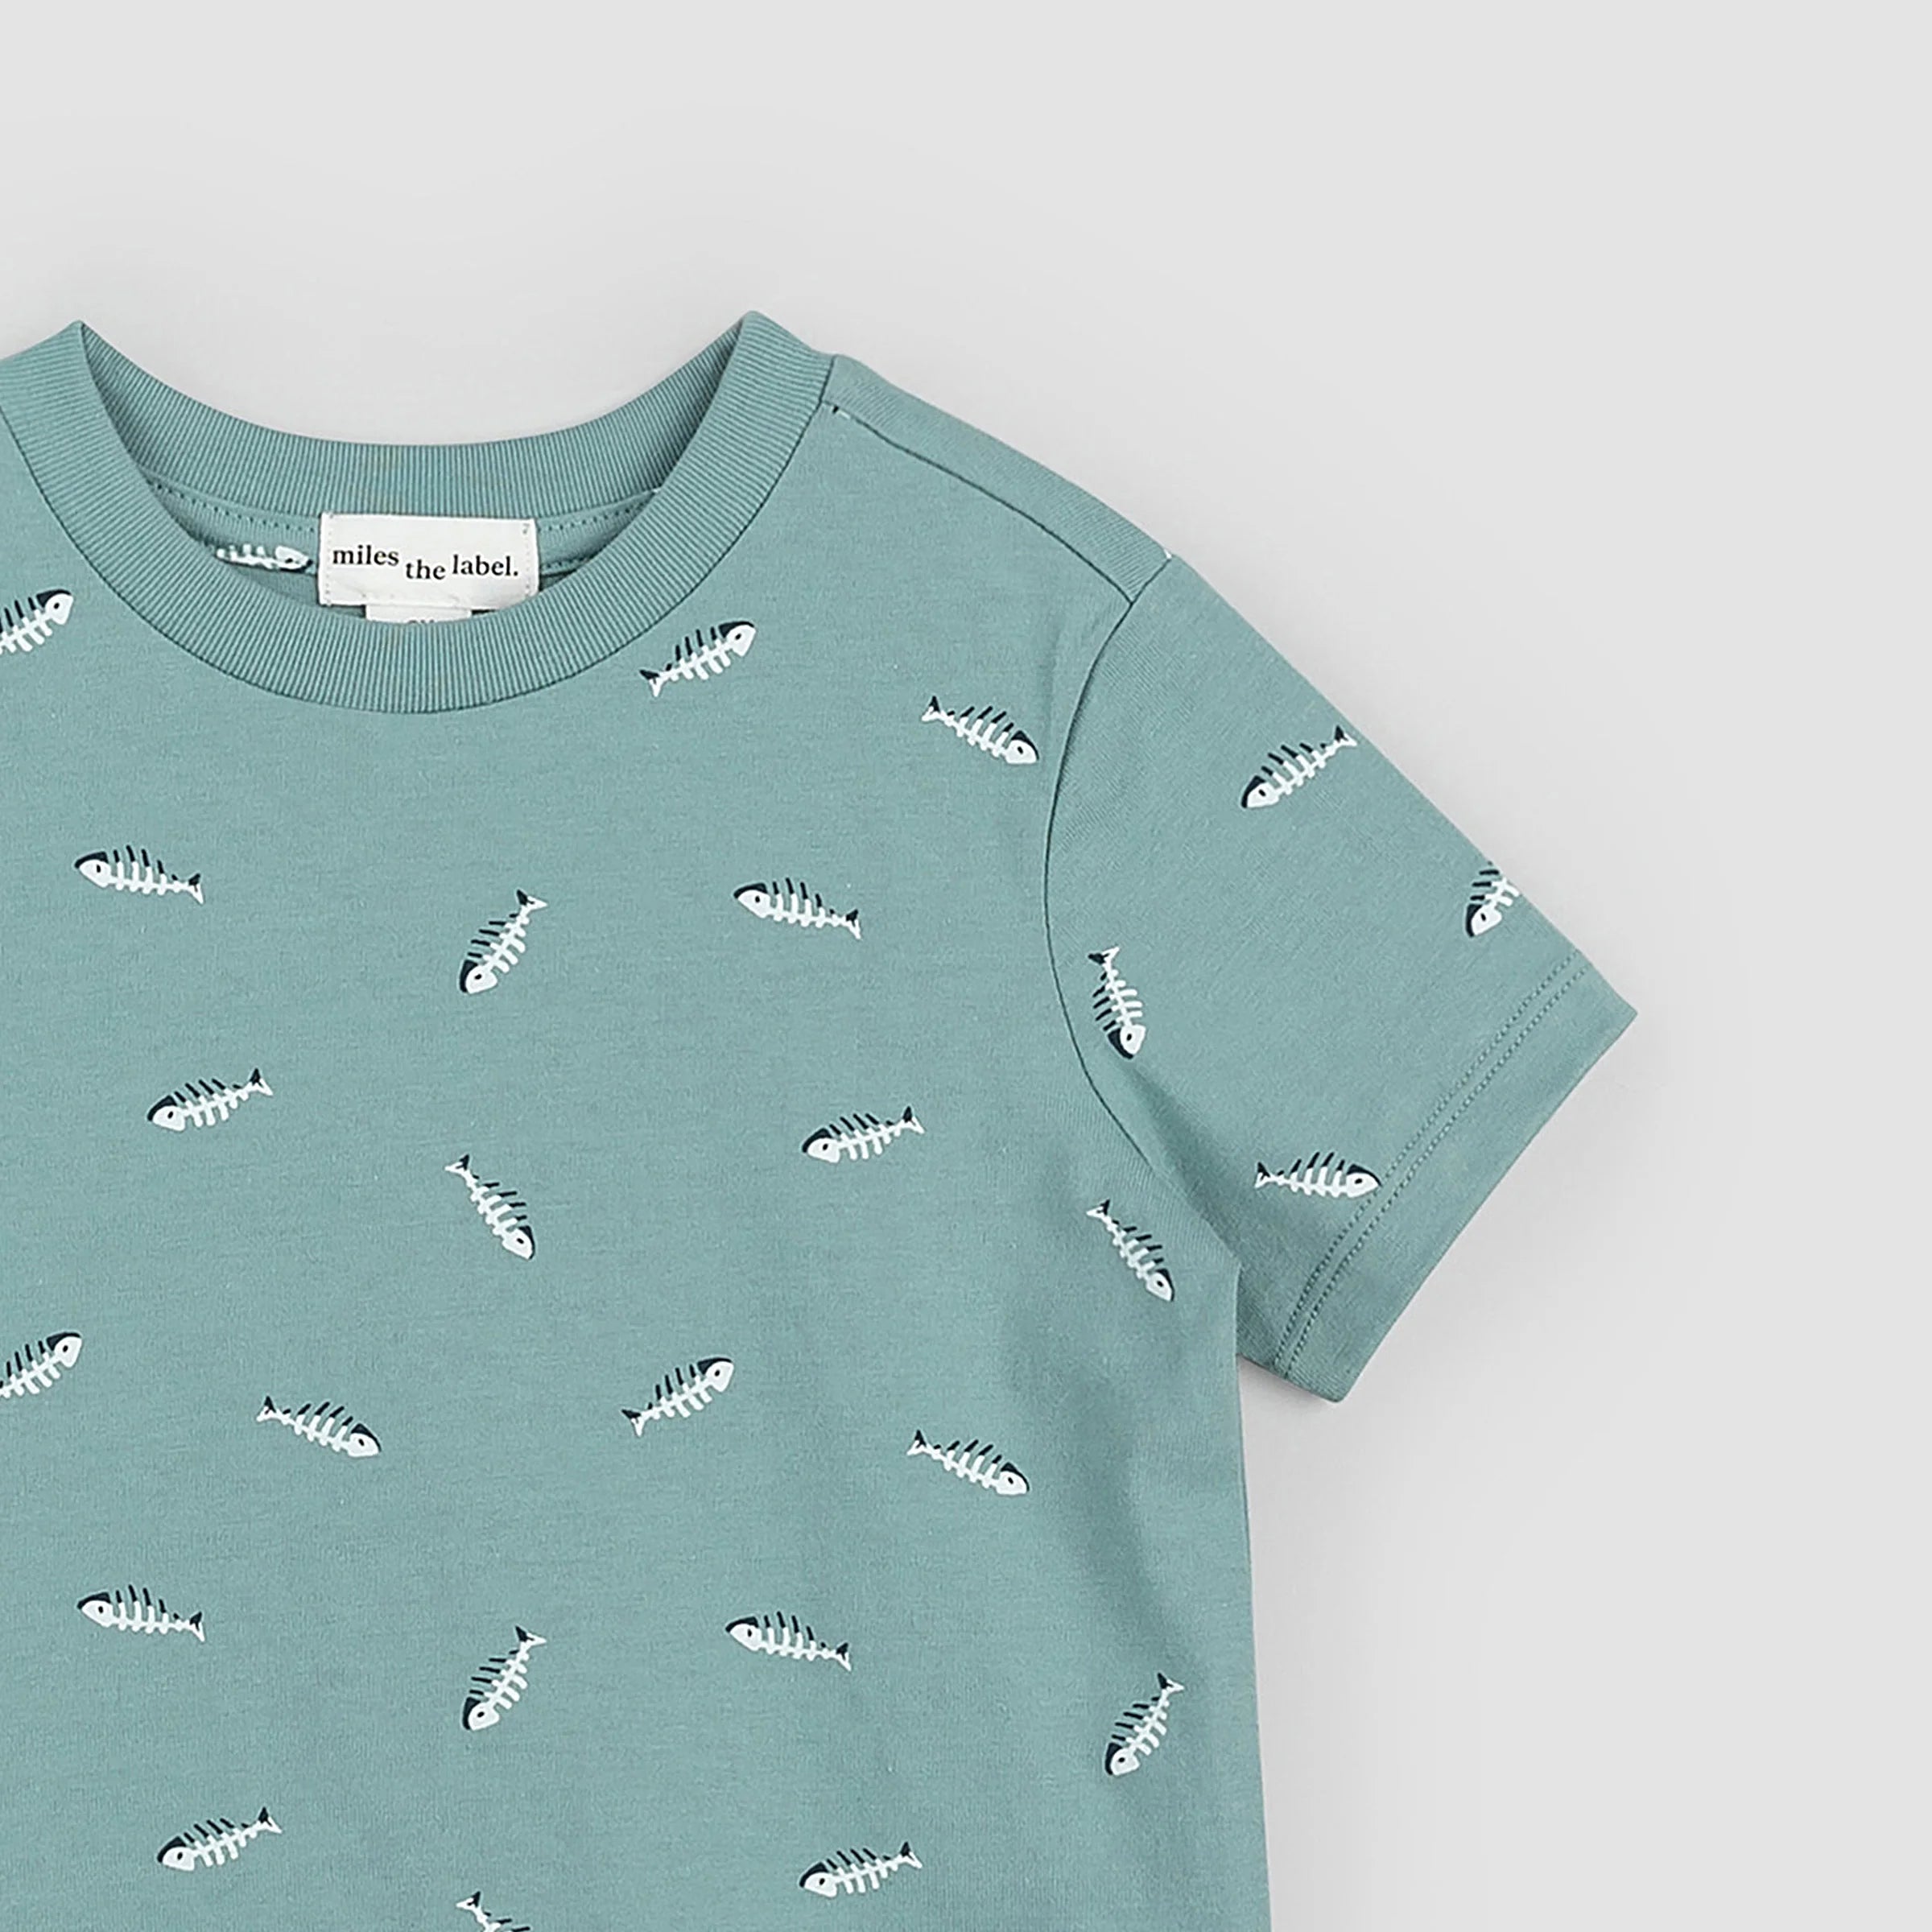 Fishbone Print on Seafoam T-Shirt